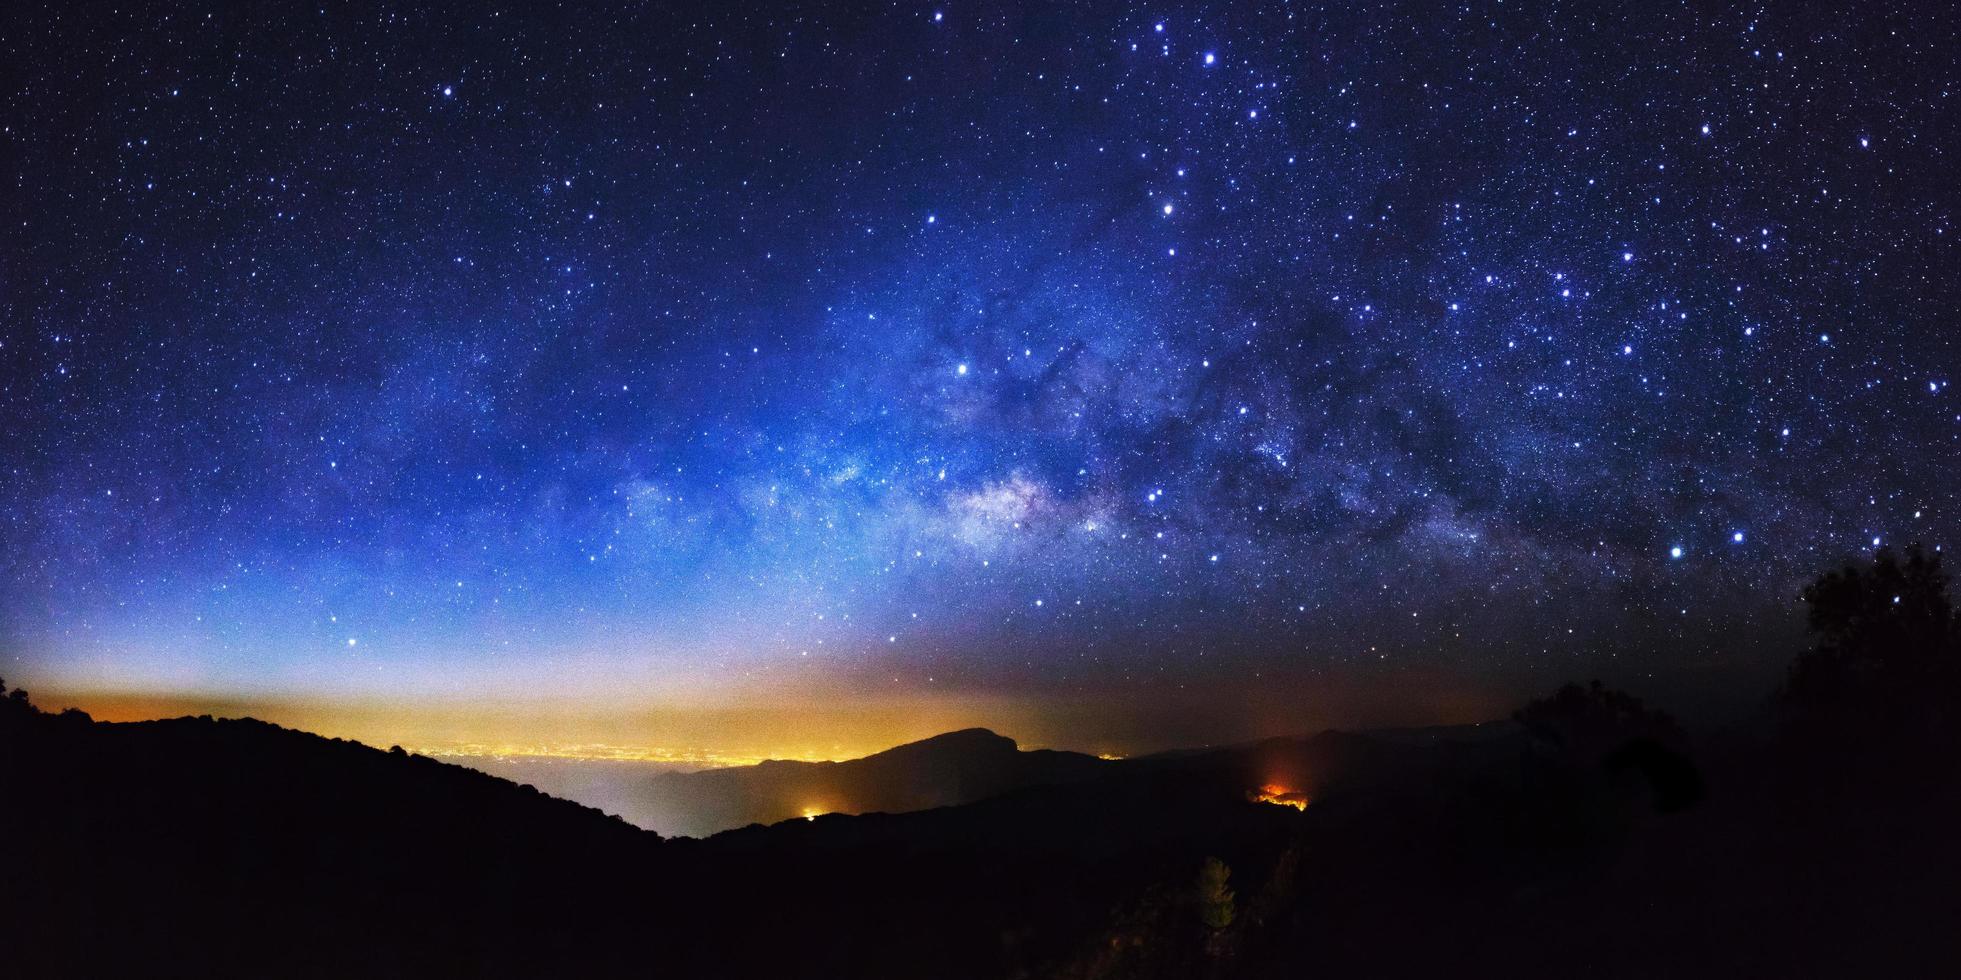 Panorama Milky Way Galaxy at Doi inthanon Chiang mai, Thailand. Long exposure photograph. With grain photo